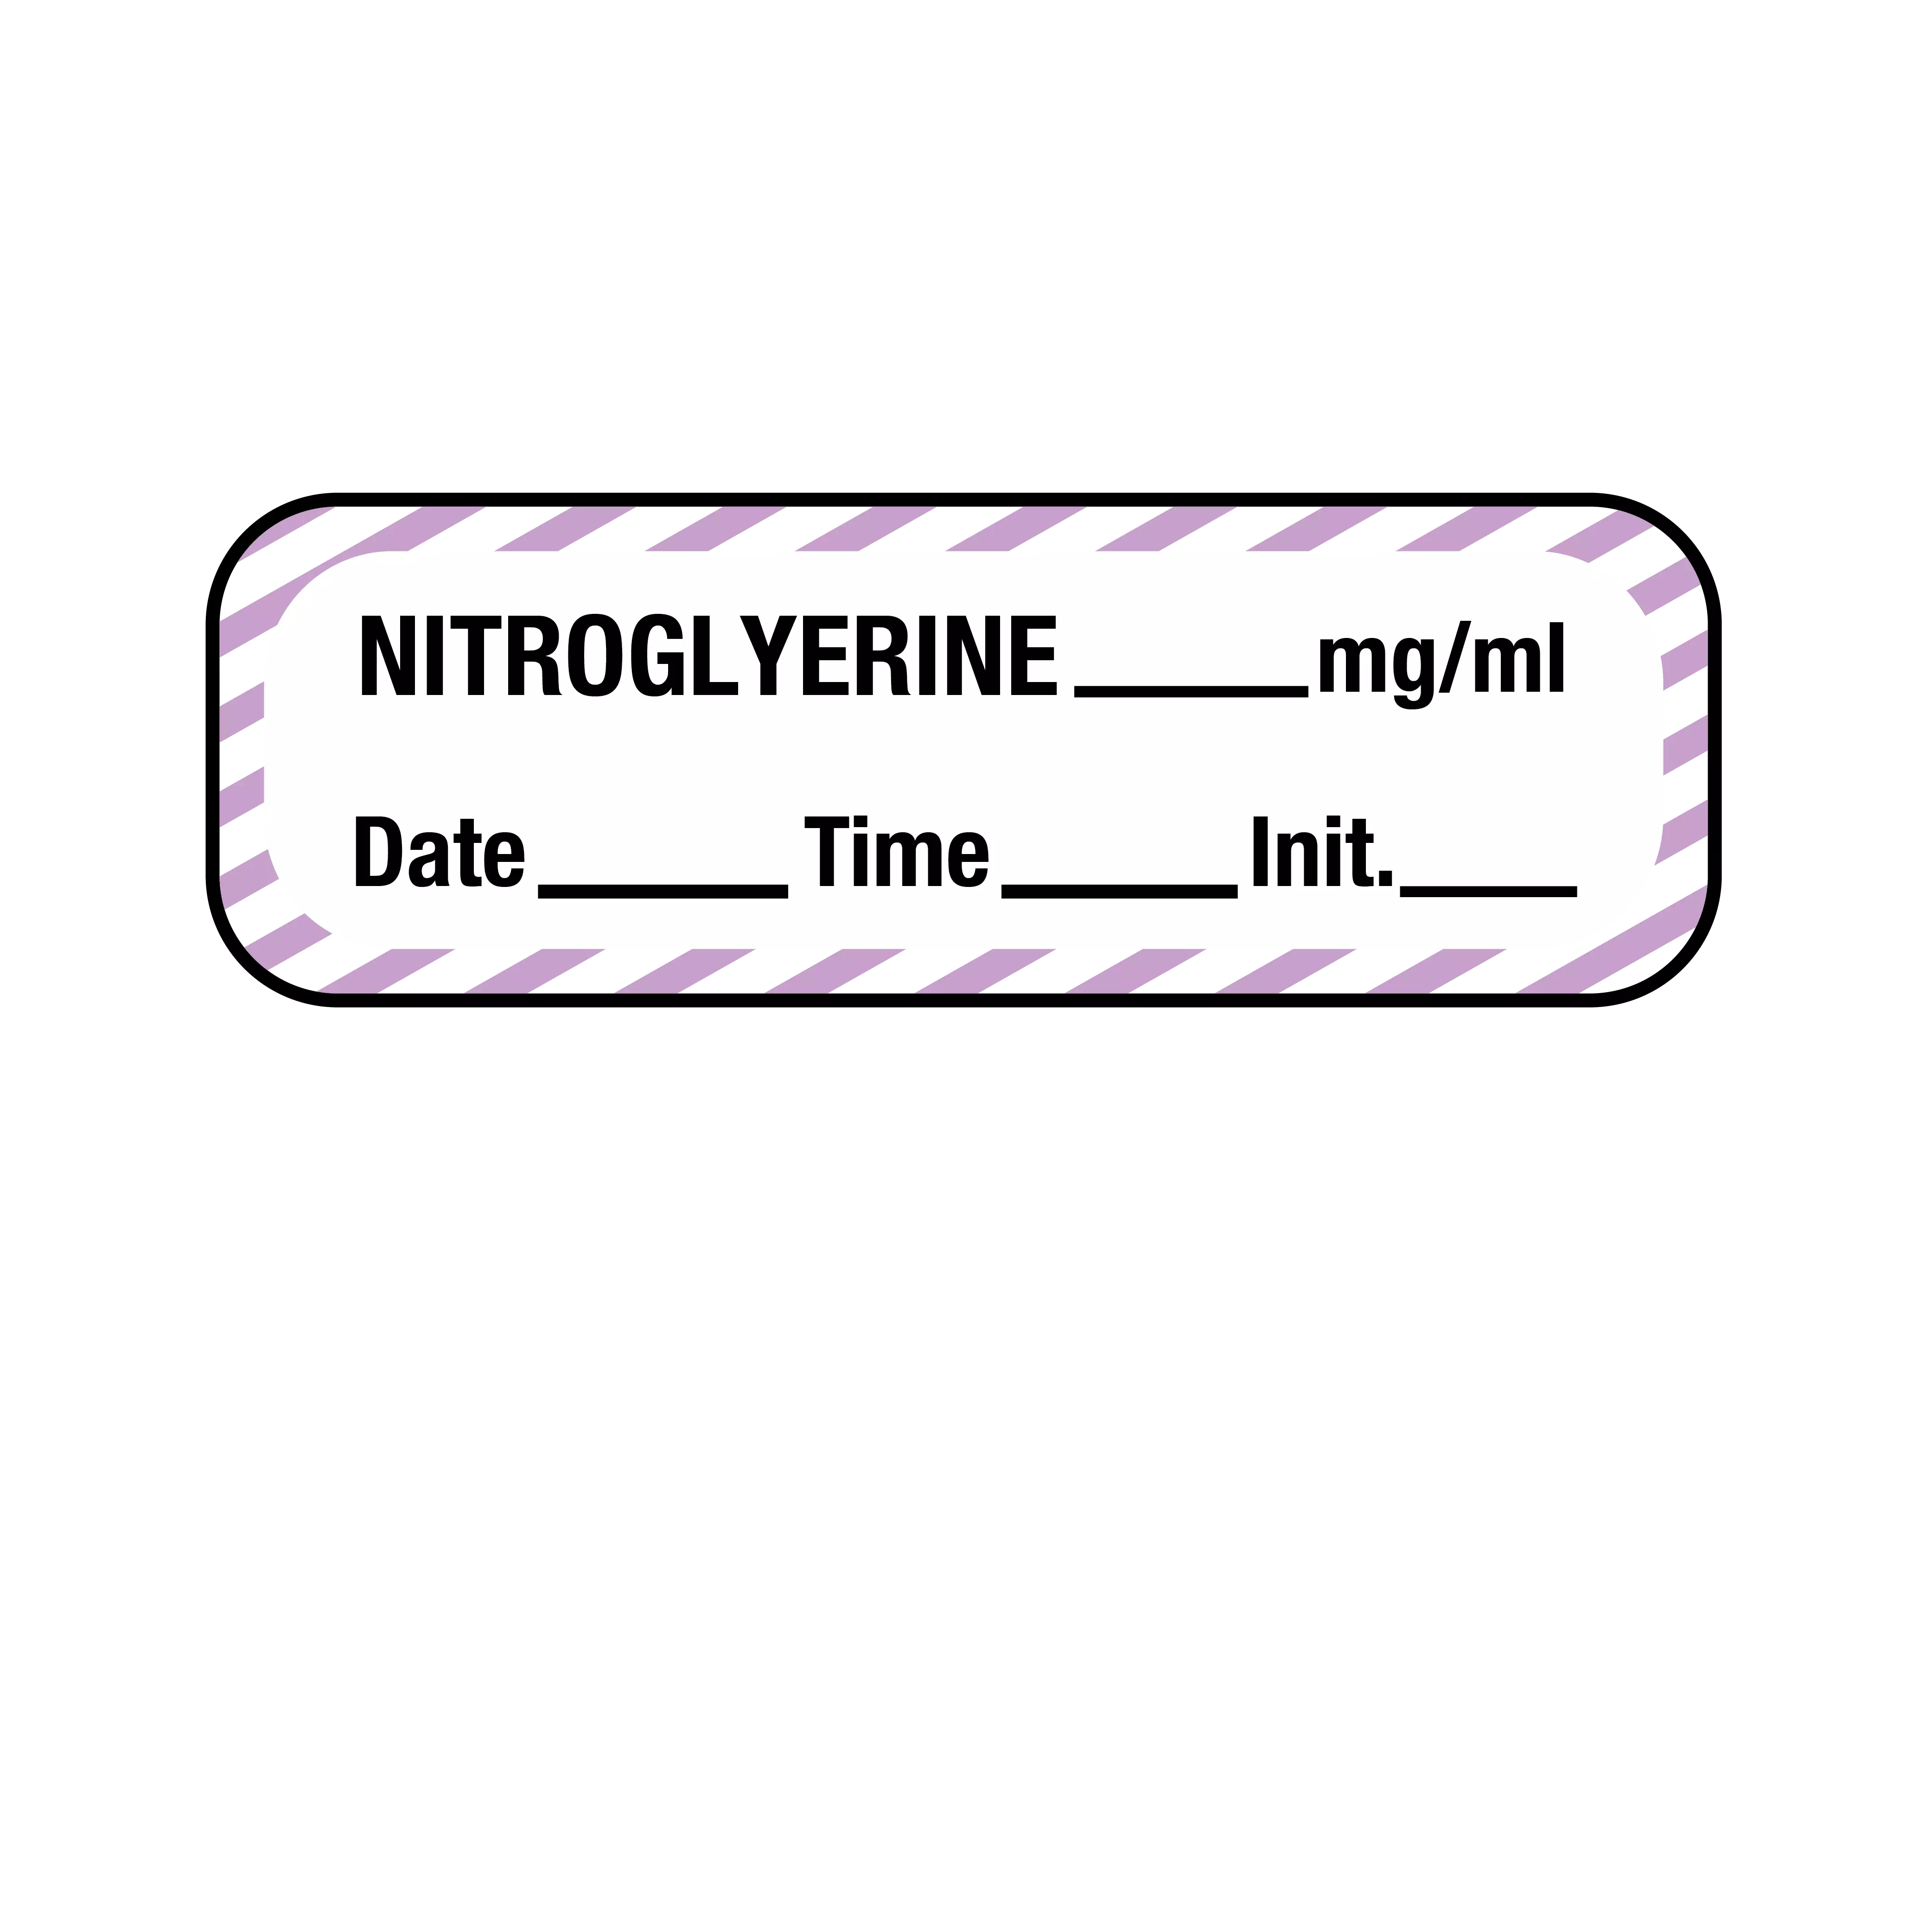 Label, Nitroglyerine